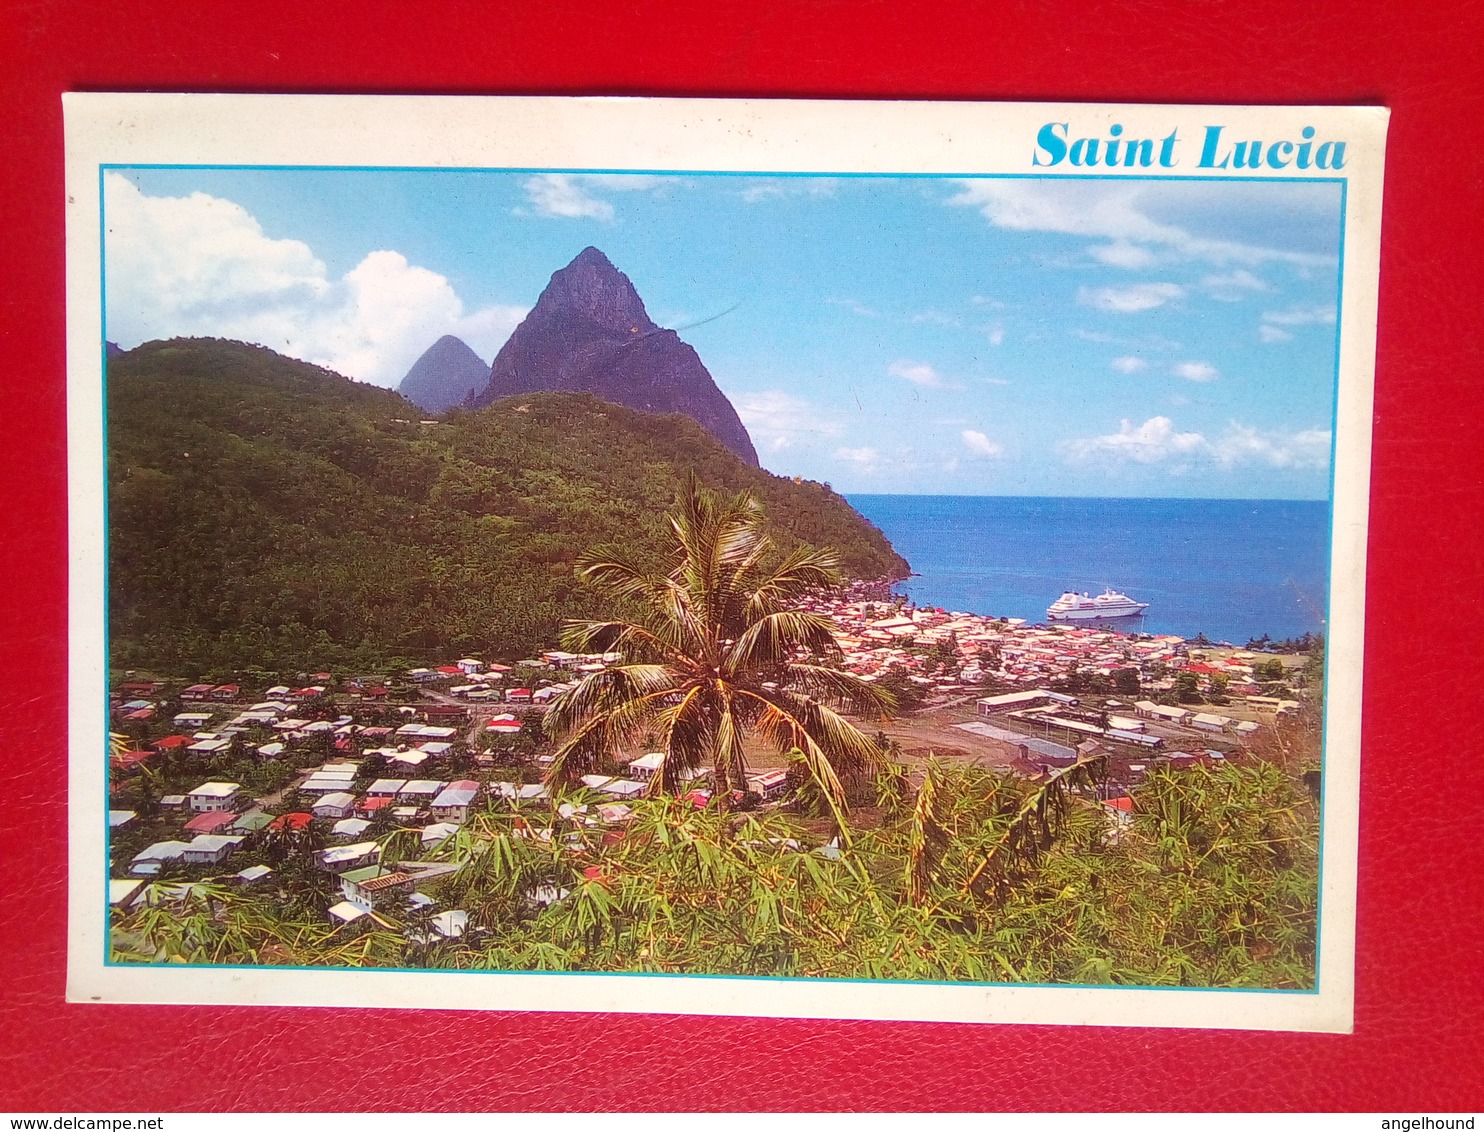 Saint Lucia - St. Lucia